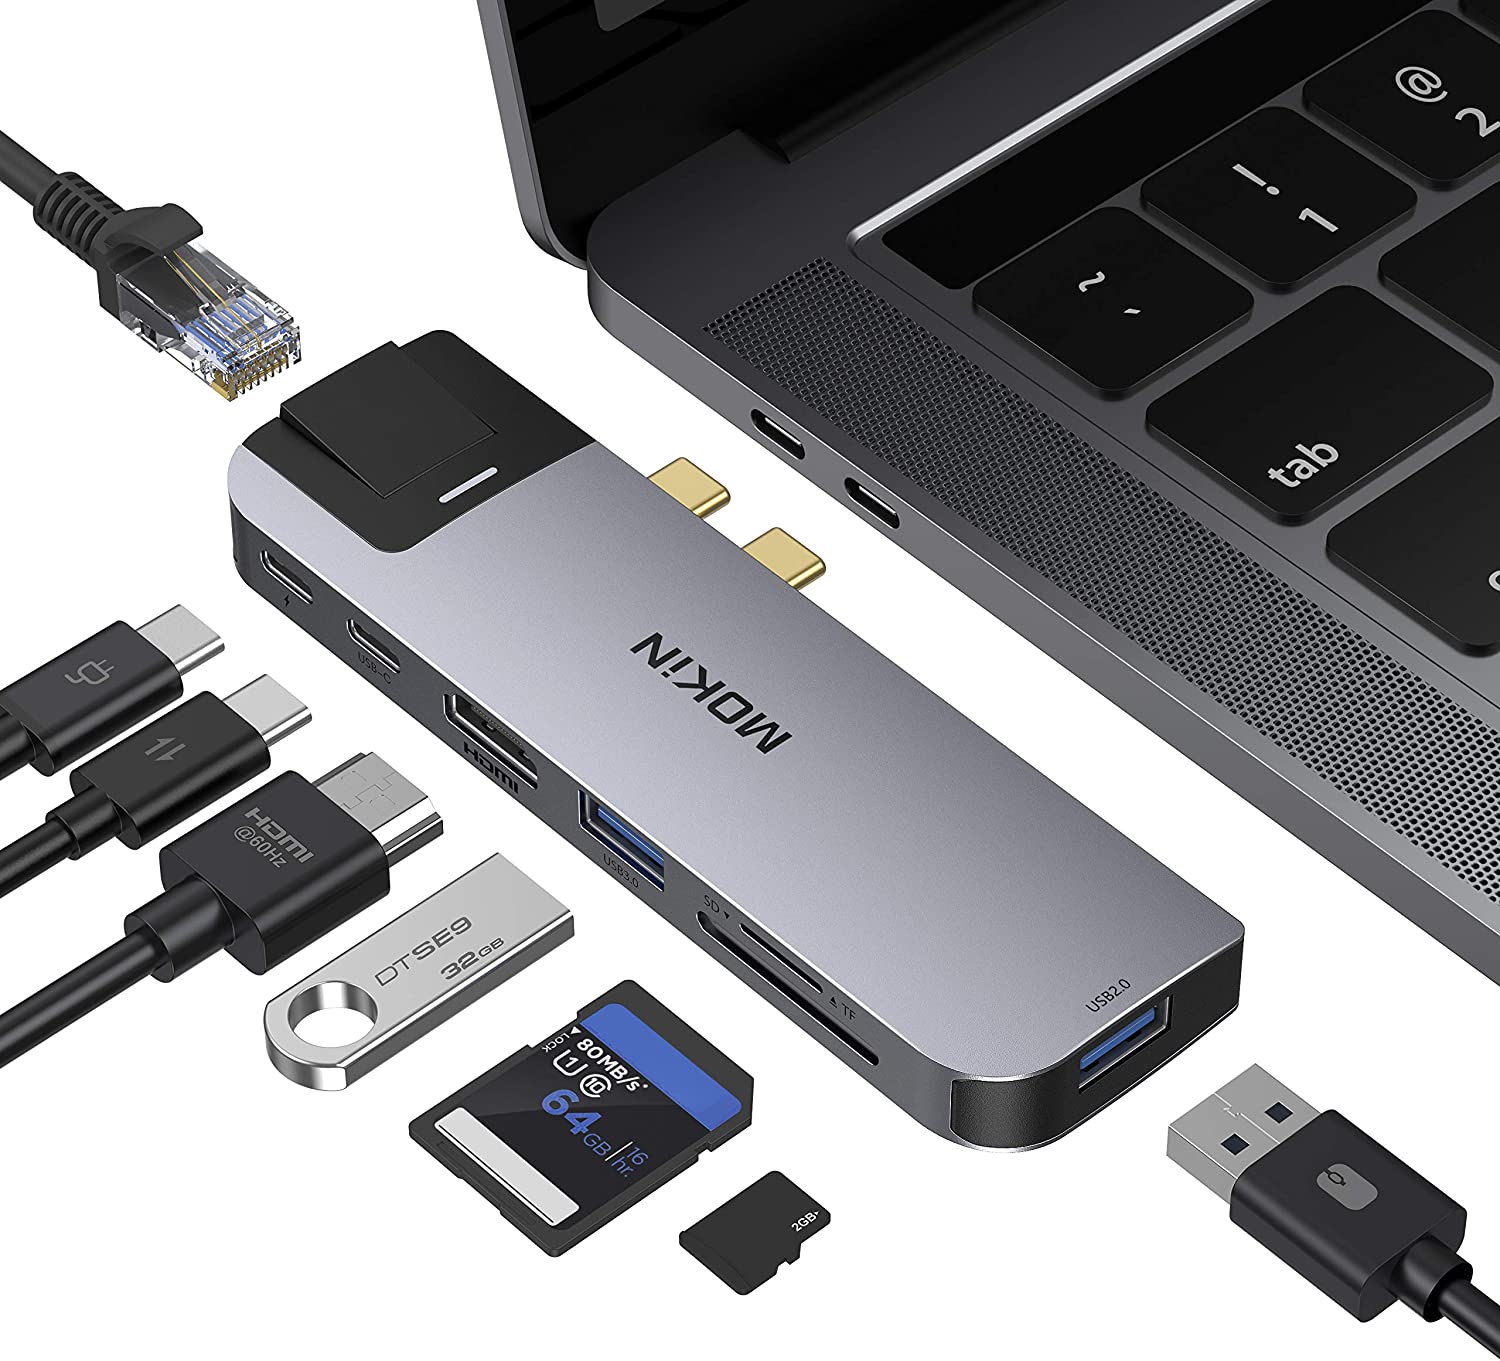 Adaptador USB para MacBook Pro, USB C multipuerto adaptador para Mac Dongle para MacBook Pro/Air con puerto HDMI 4K, Gigabit ethernet, 2 USB, lector de tarjetas TF/SD, USB-C 100W PD y Thunderbolt 3